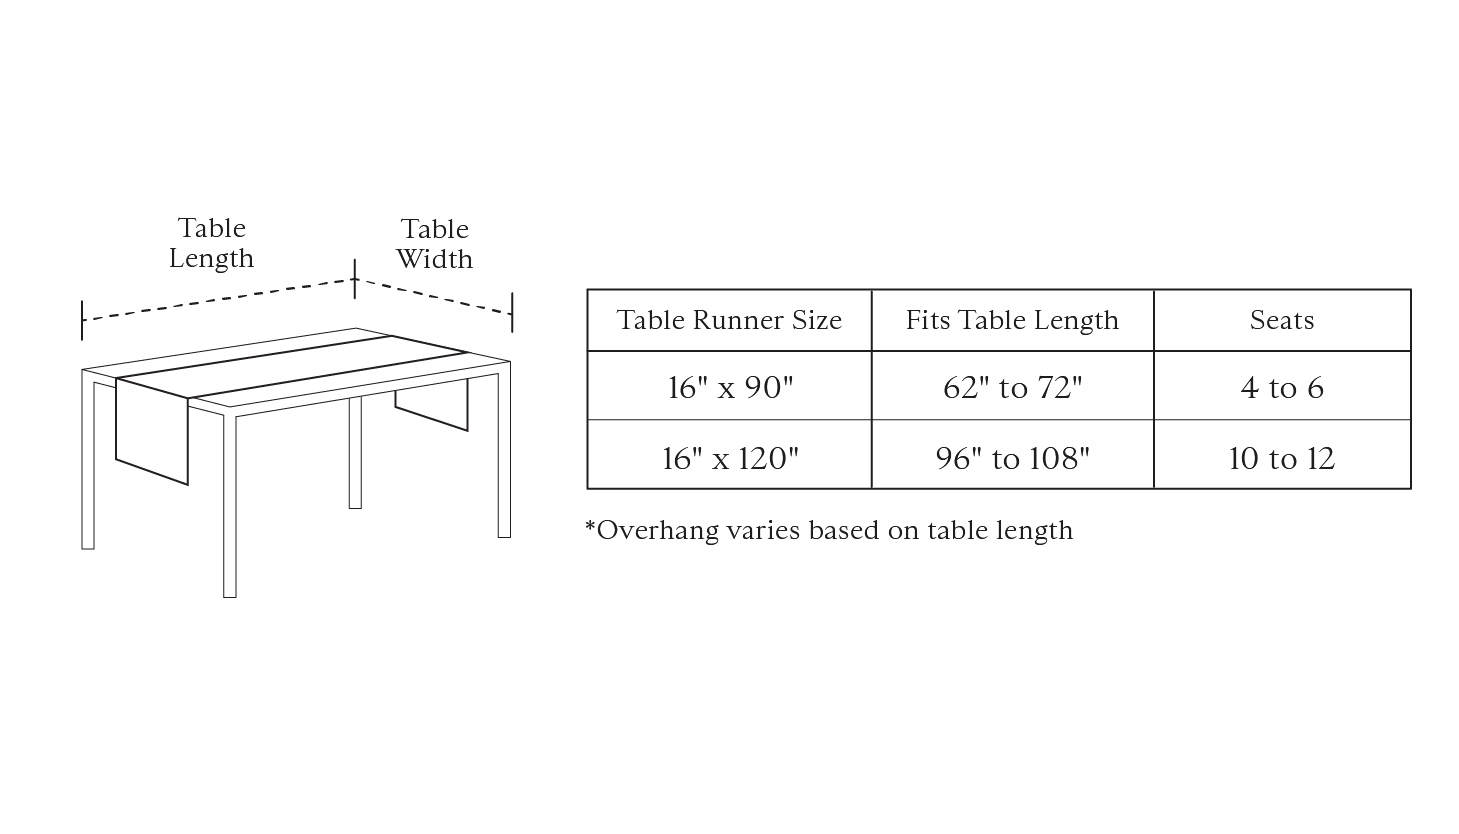 Table Runner 16" x 120", Delft Mariposa, 16" x 120" - Image 2